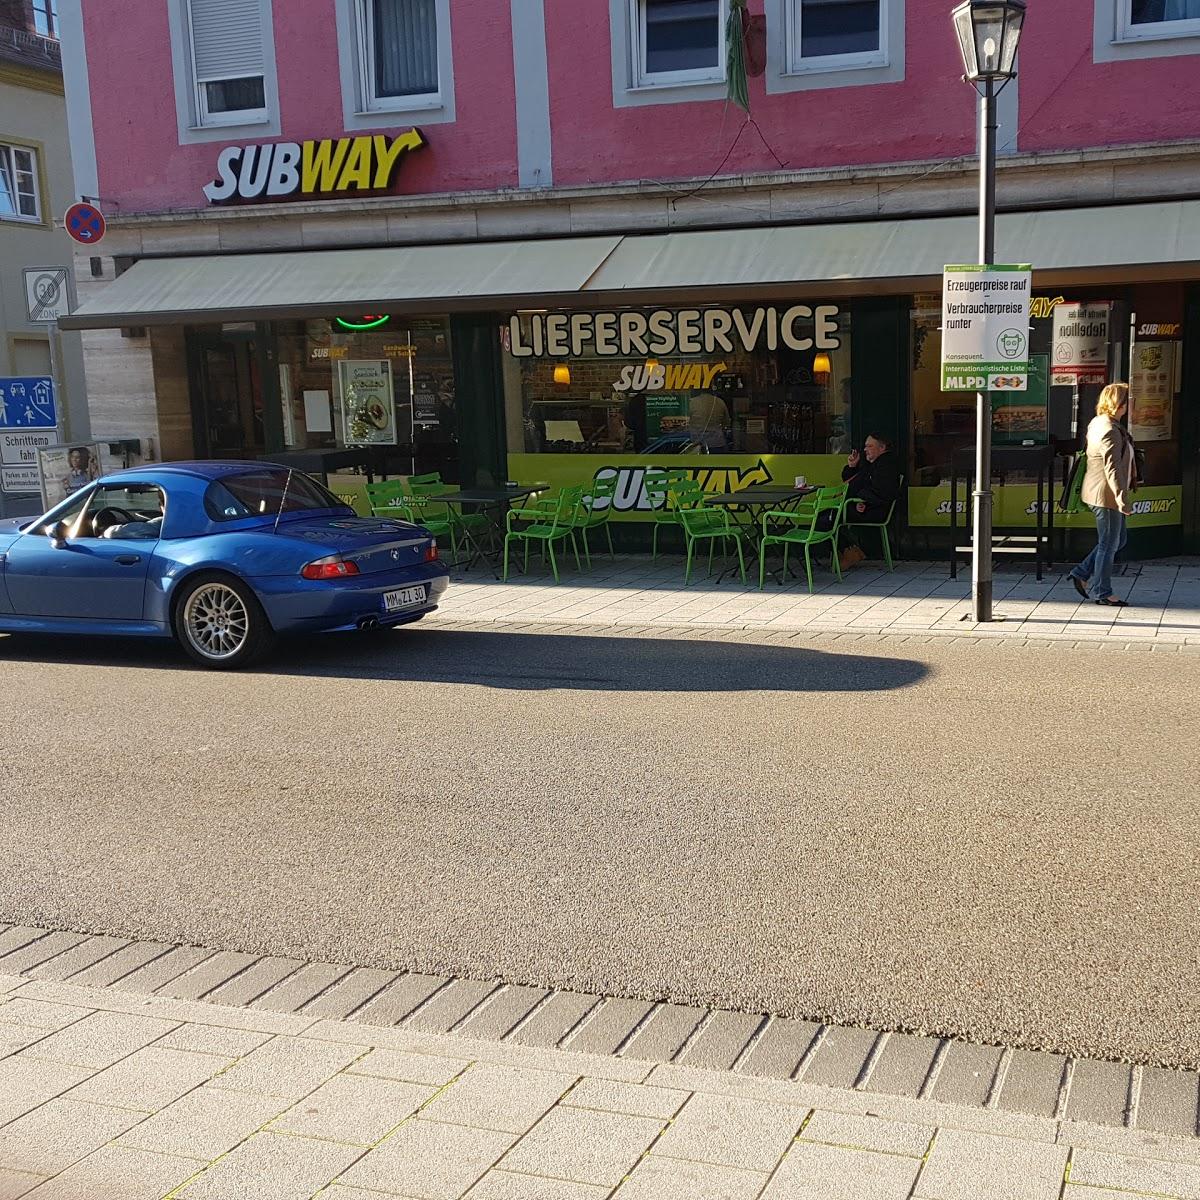 Restaurant "Subway" in Memmingen